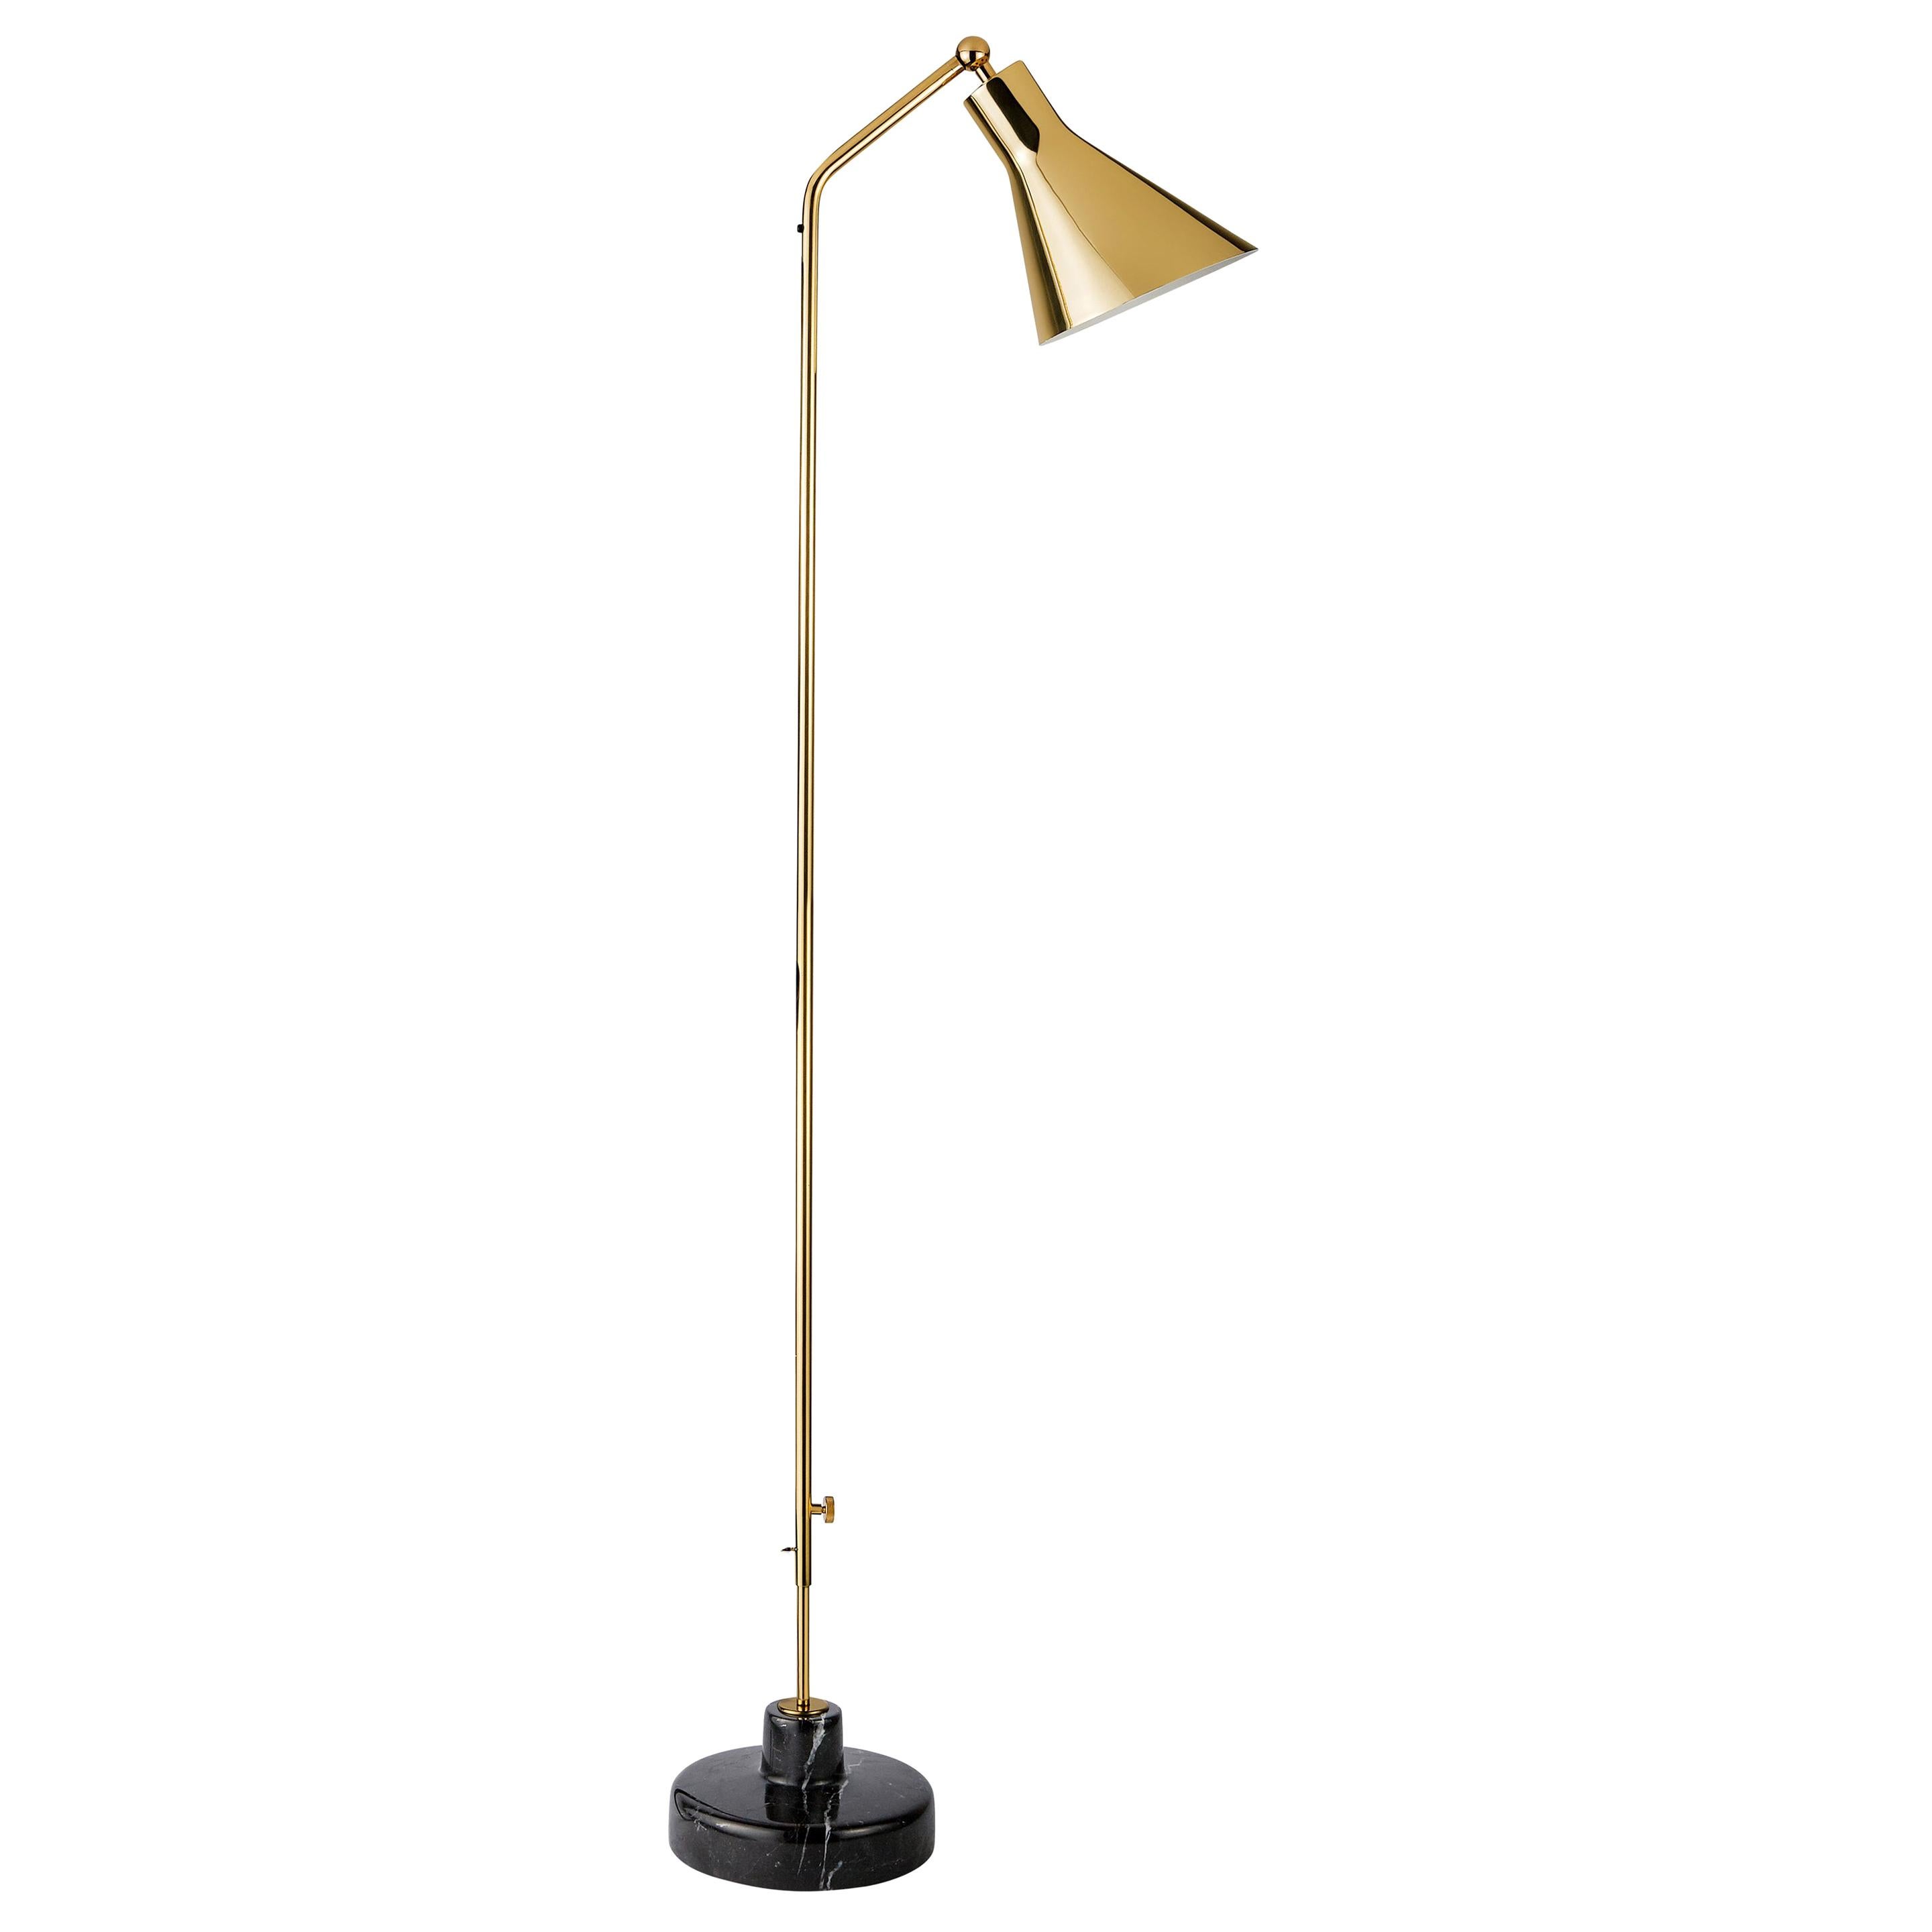 Ignazio Gardella Alzabile Floor Lamp in Brass and Black Marble